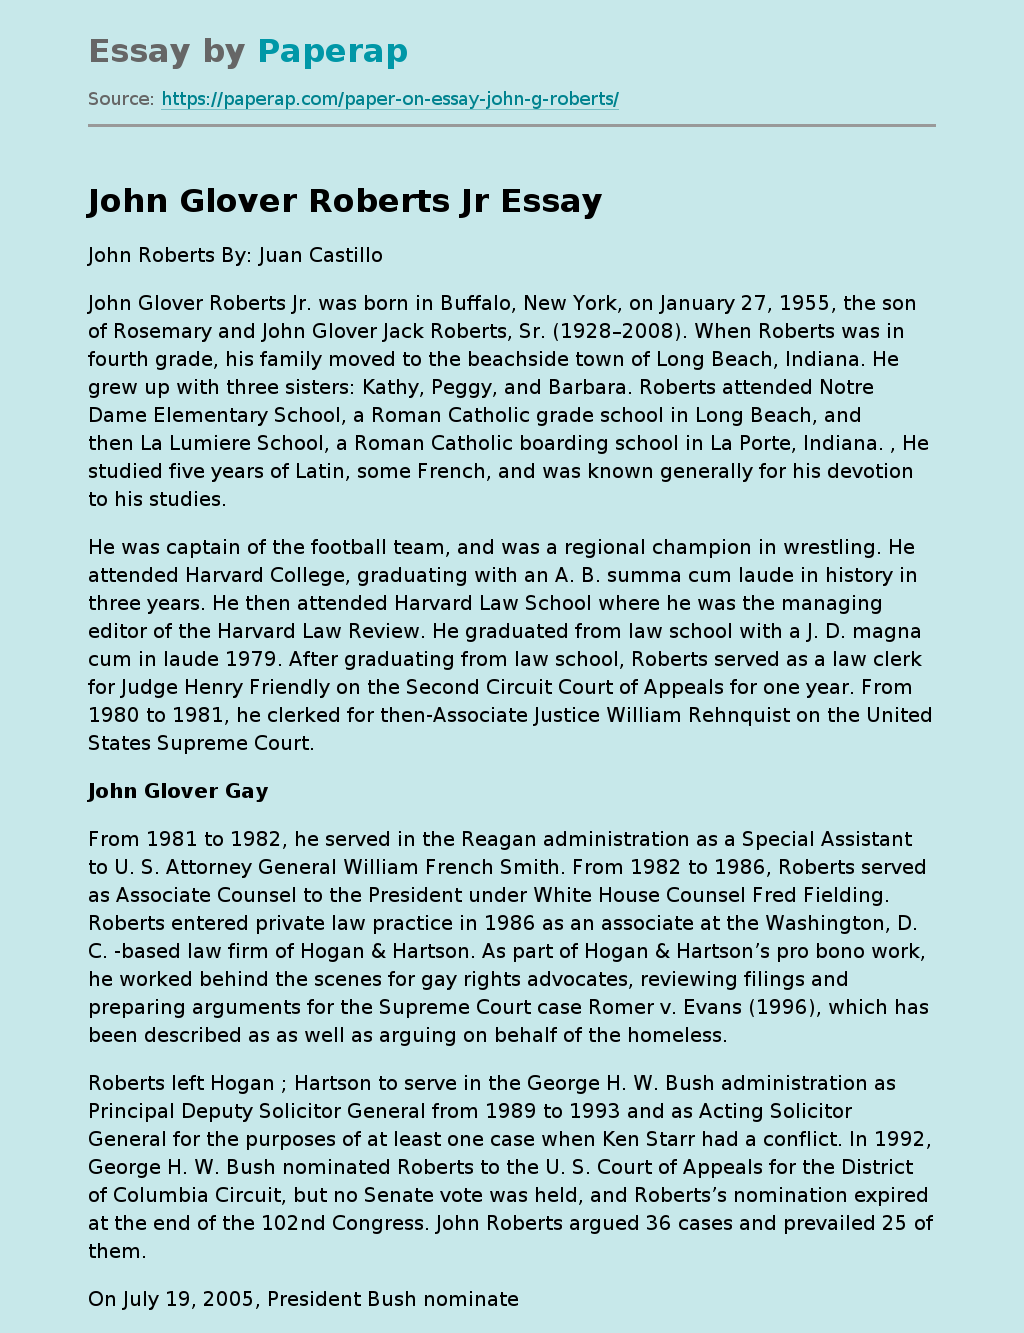 John Glover Roberts Gay